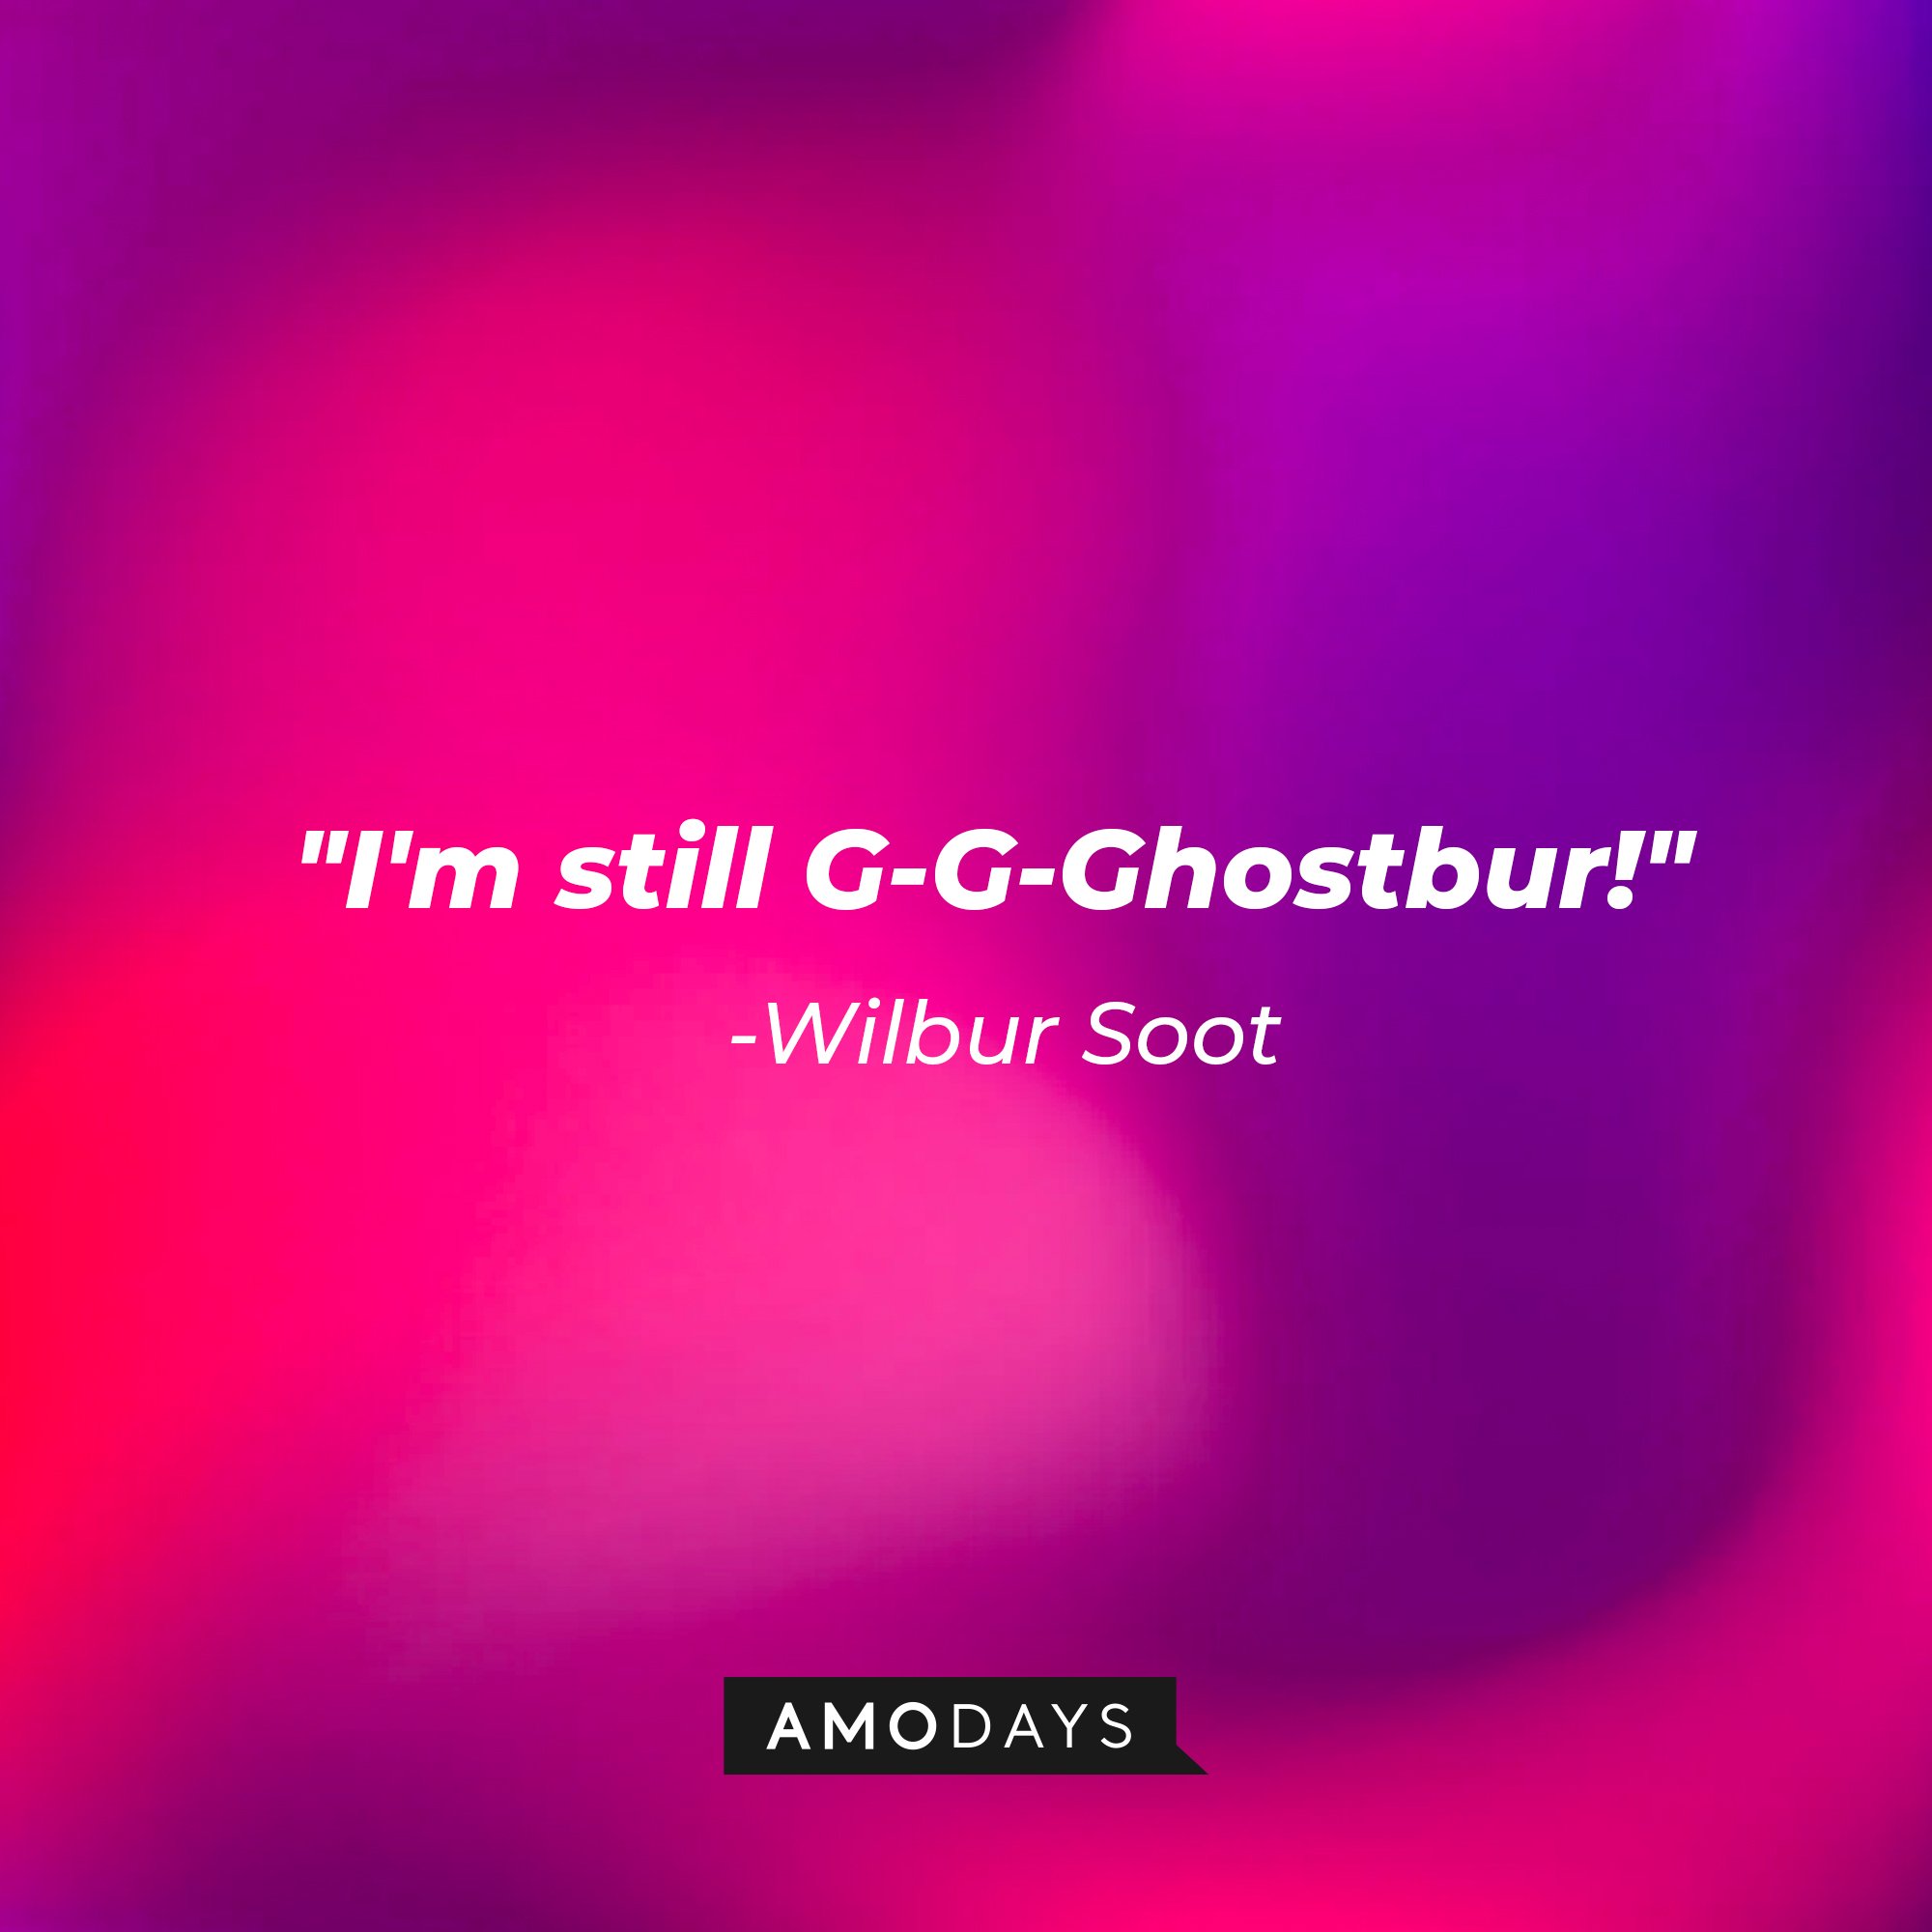 Wilbur Soot's quote: "I'm still G-G-Ghostbur!" | Image: AmoDays